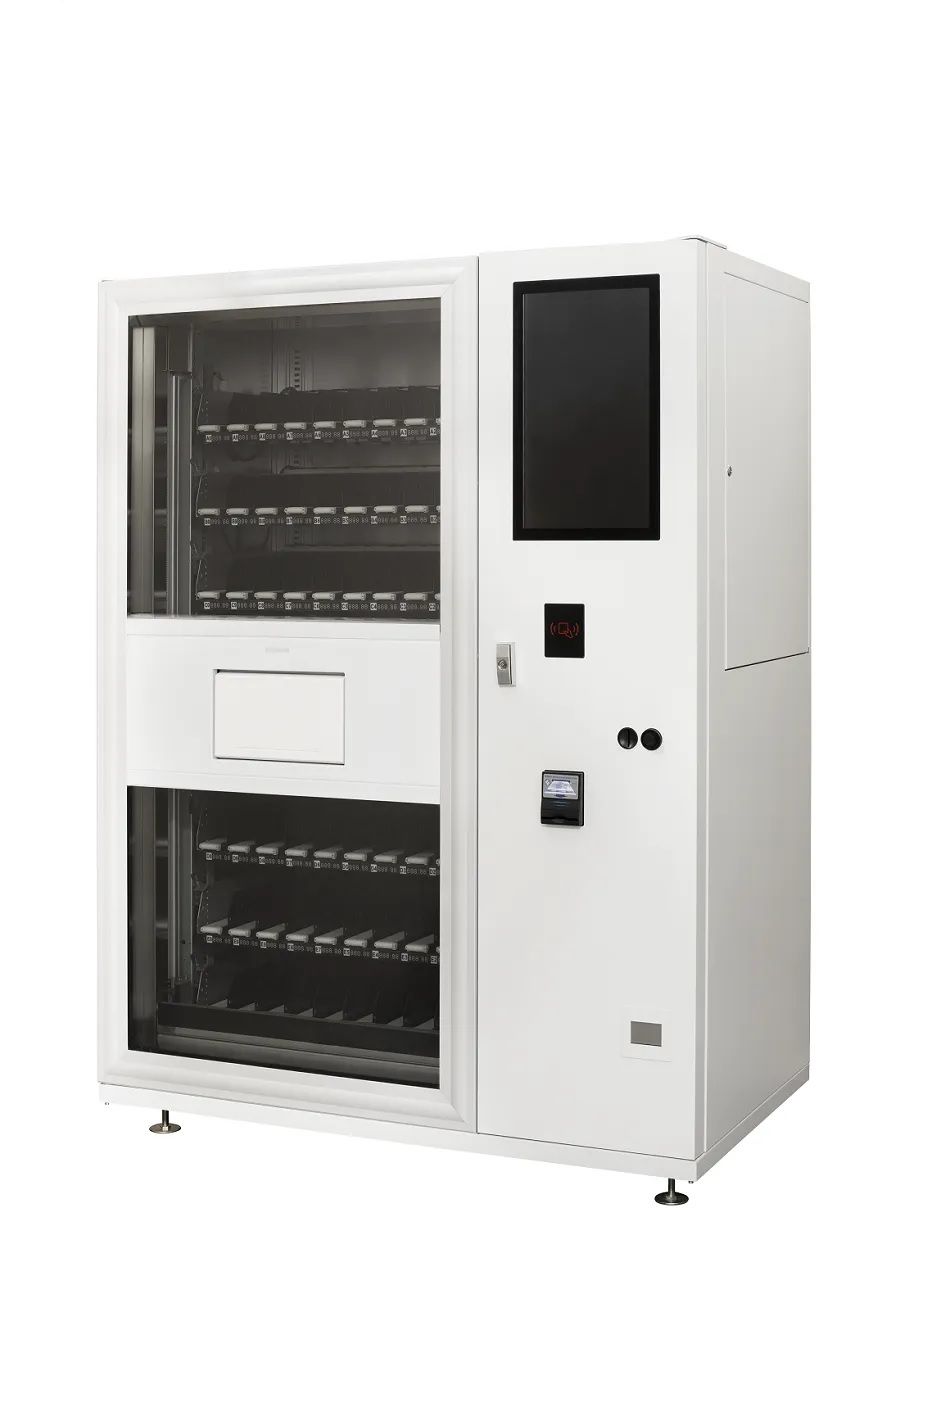 Lemgo vending machine plain